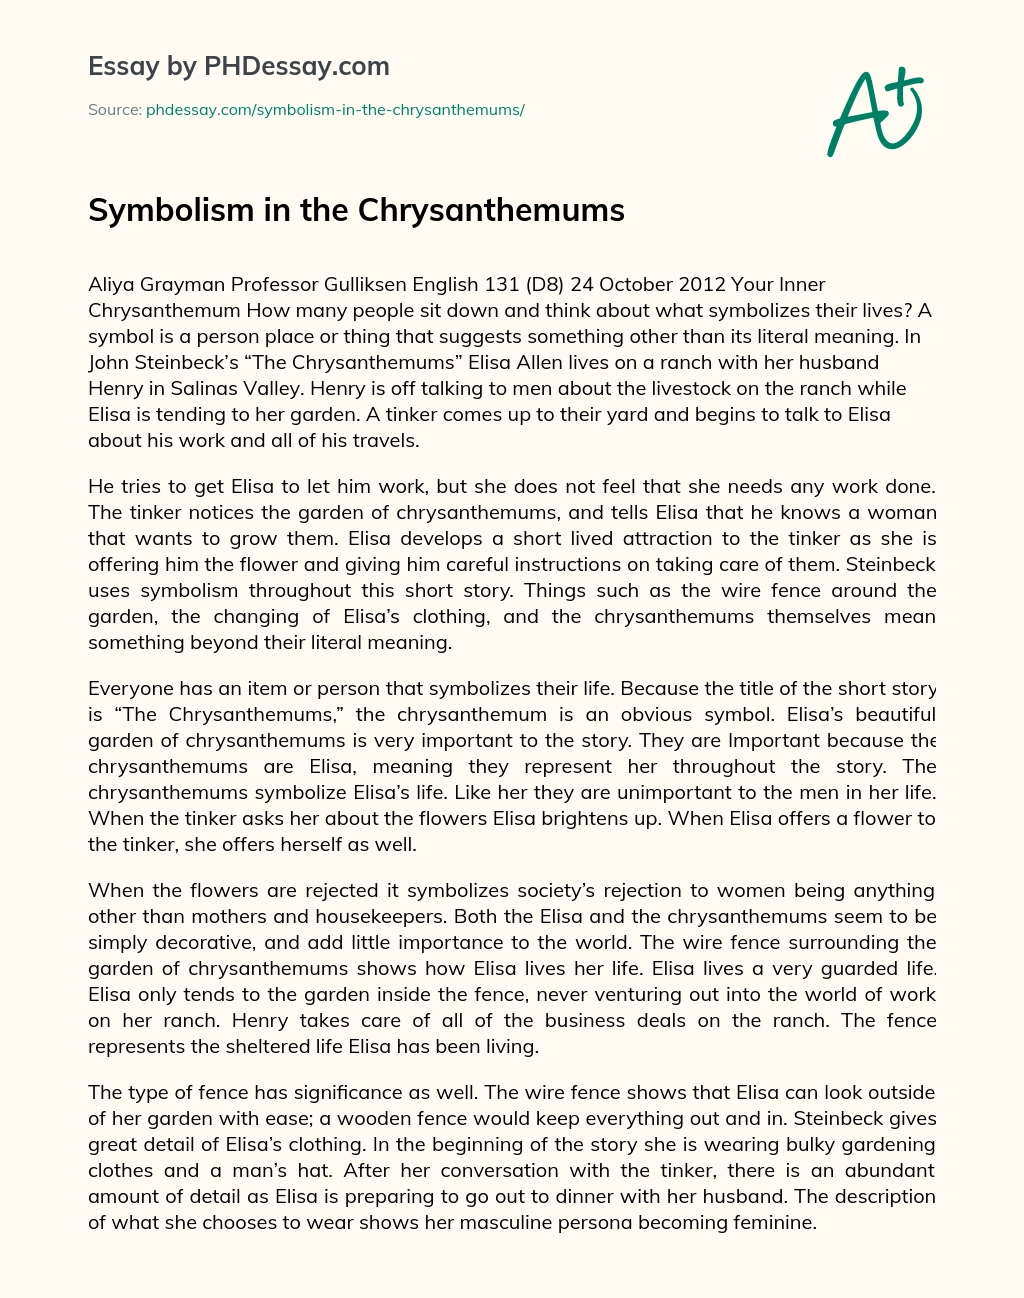 Symbolism in the Chrysanthemums essay